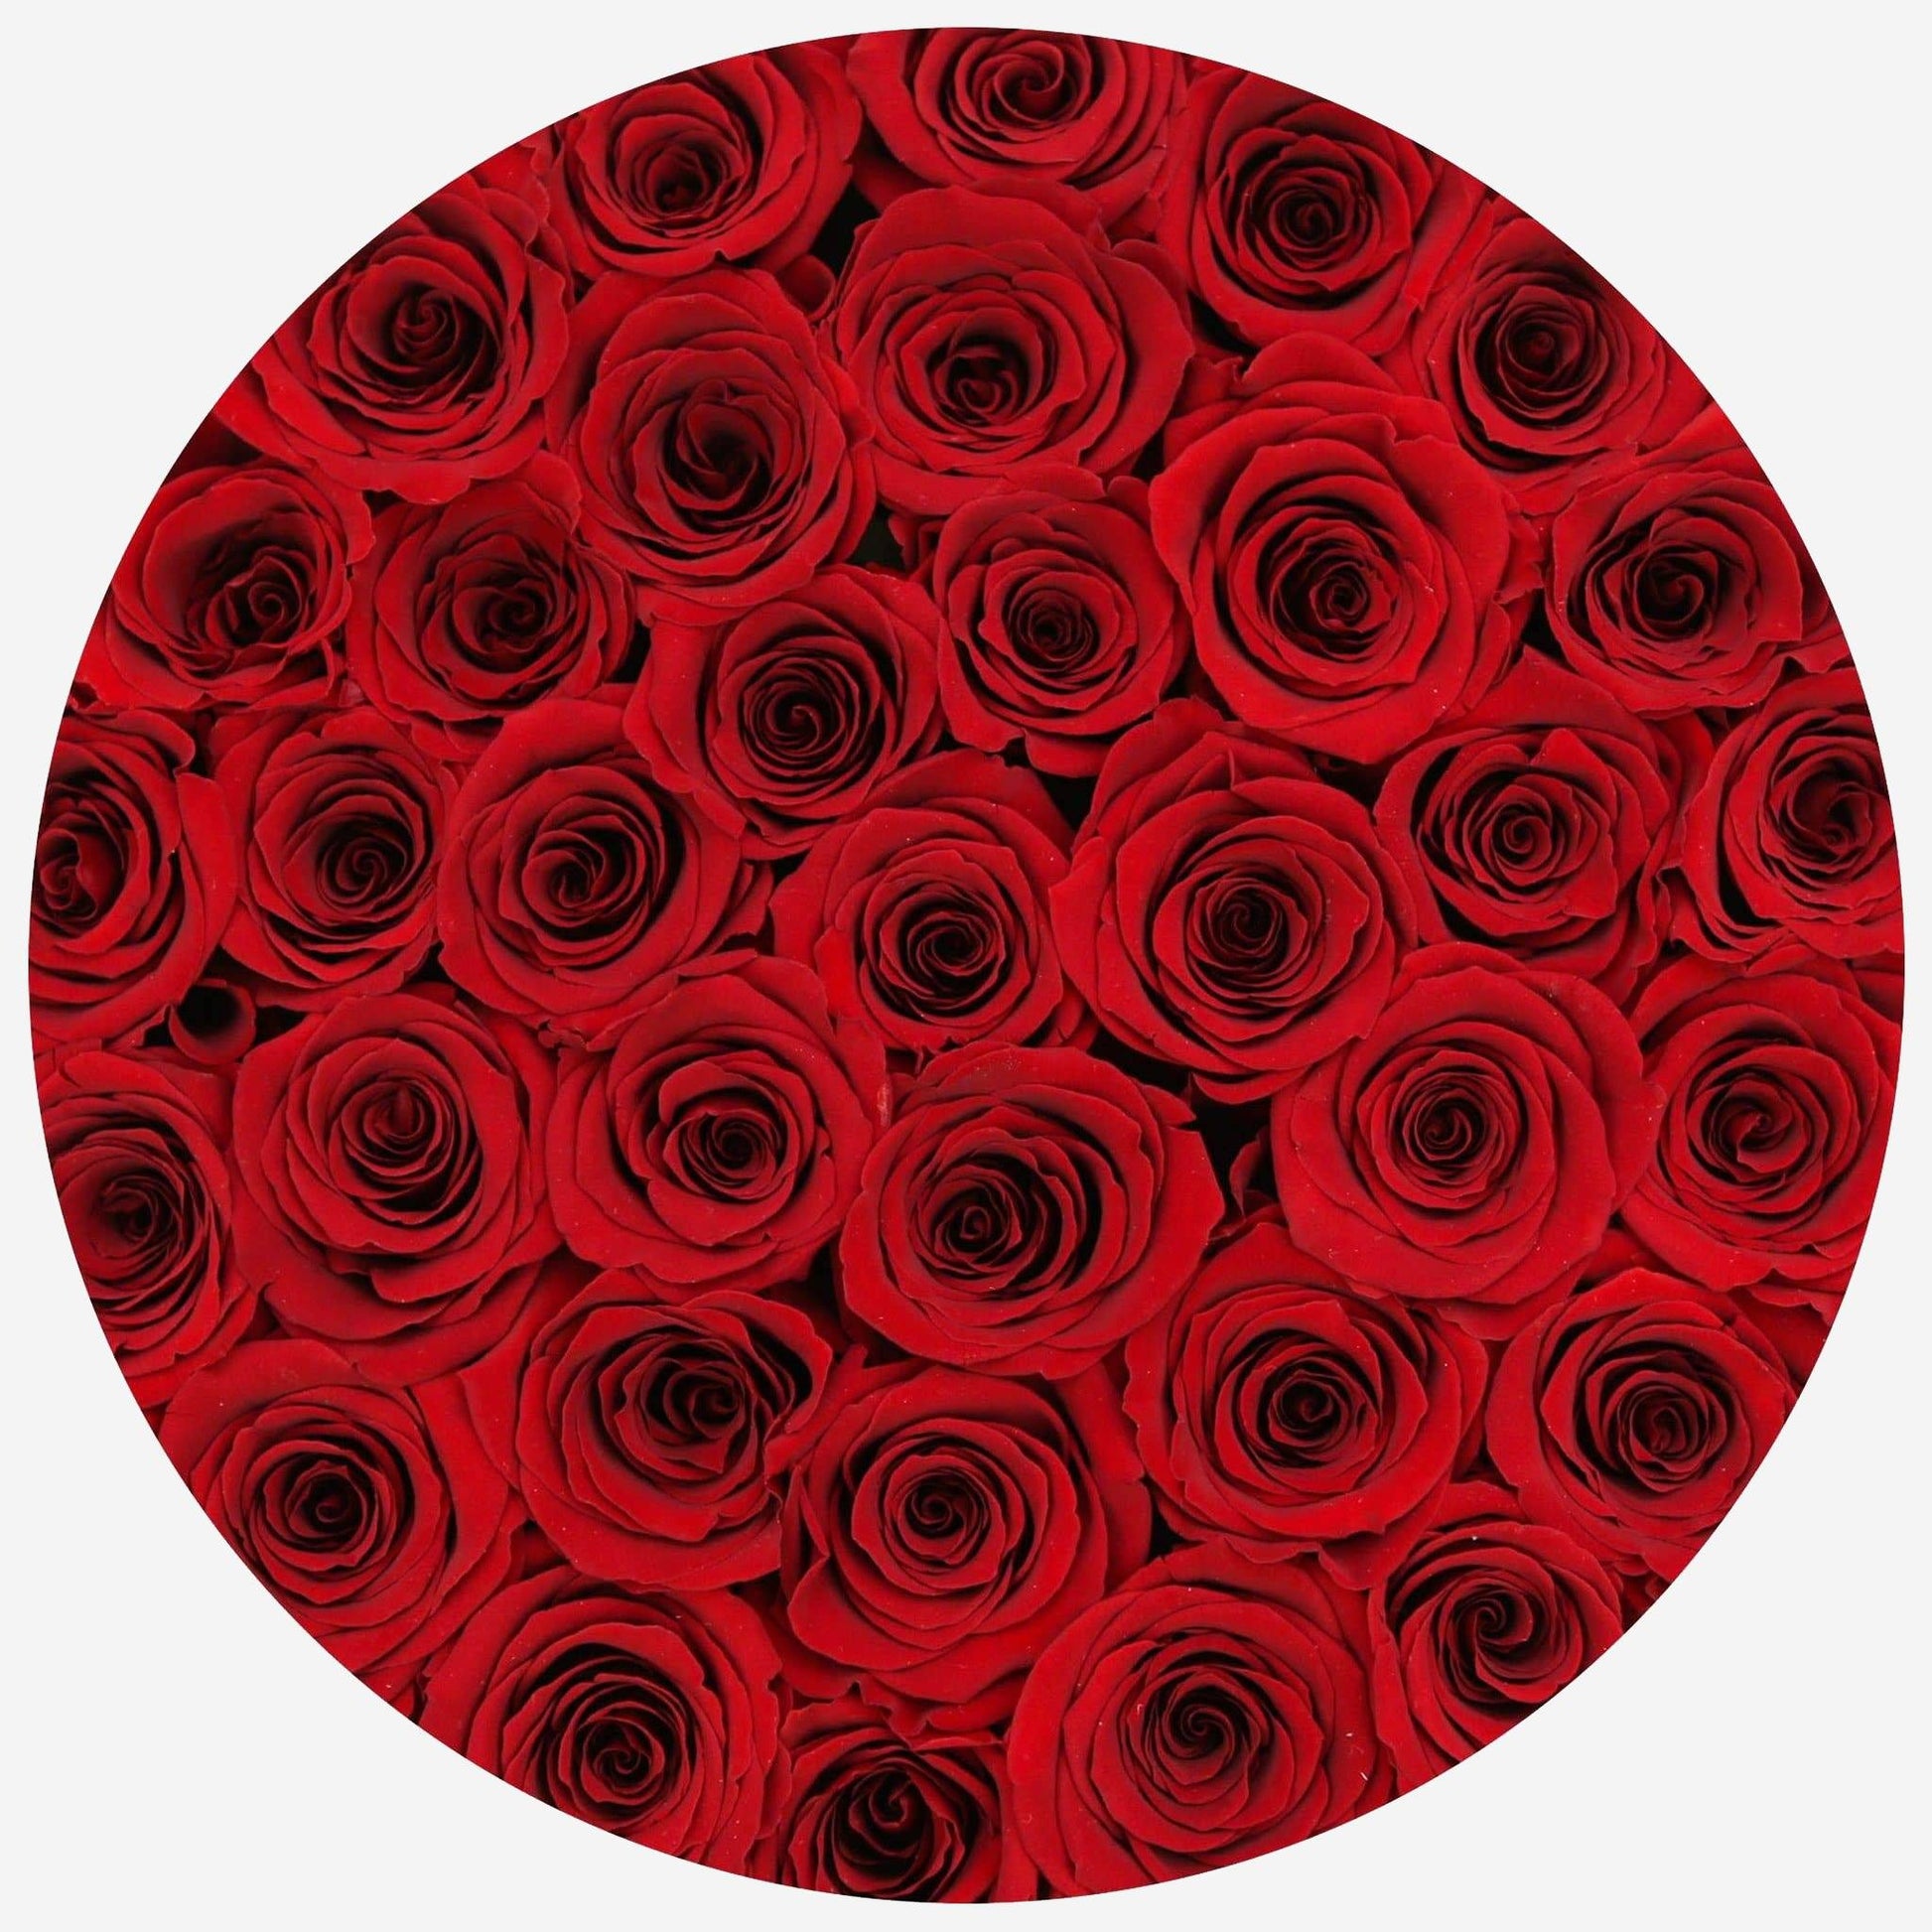 Supreme Black Box | Red Roses - The Million Roses